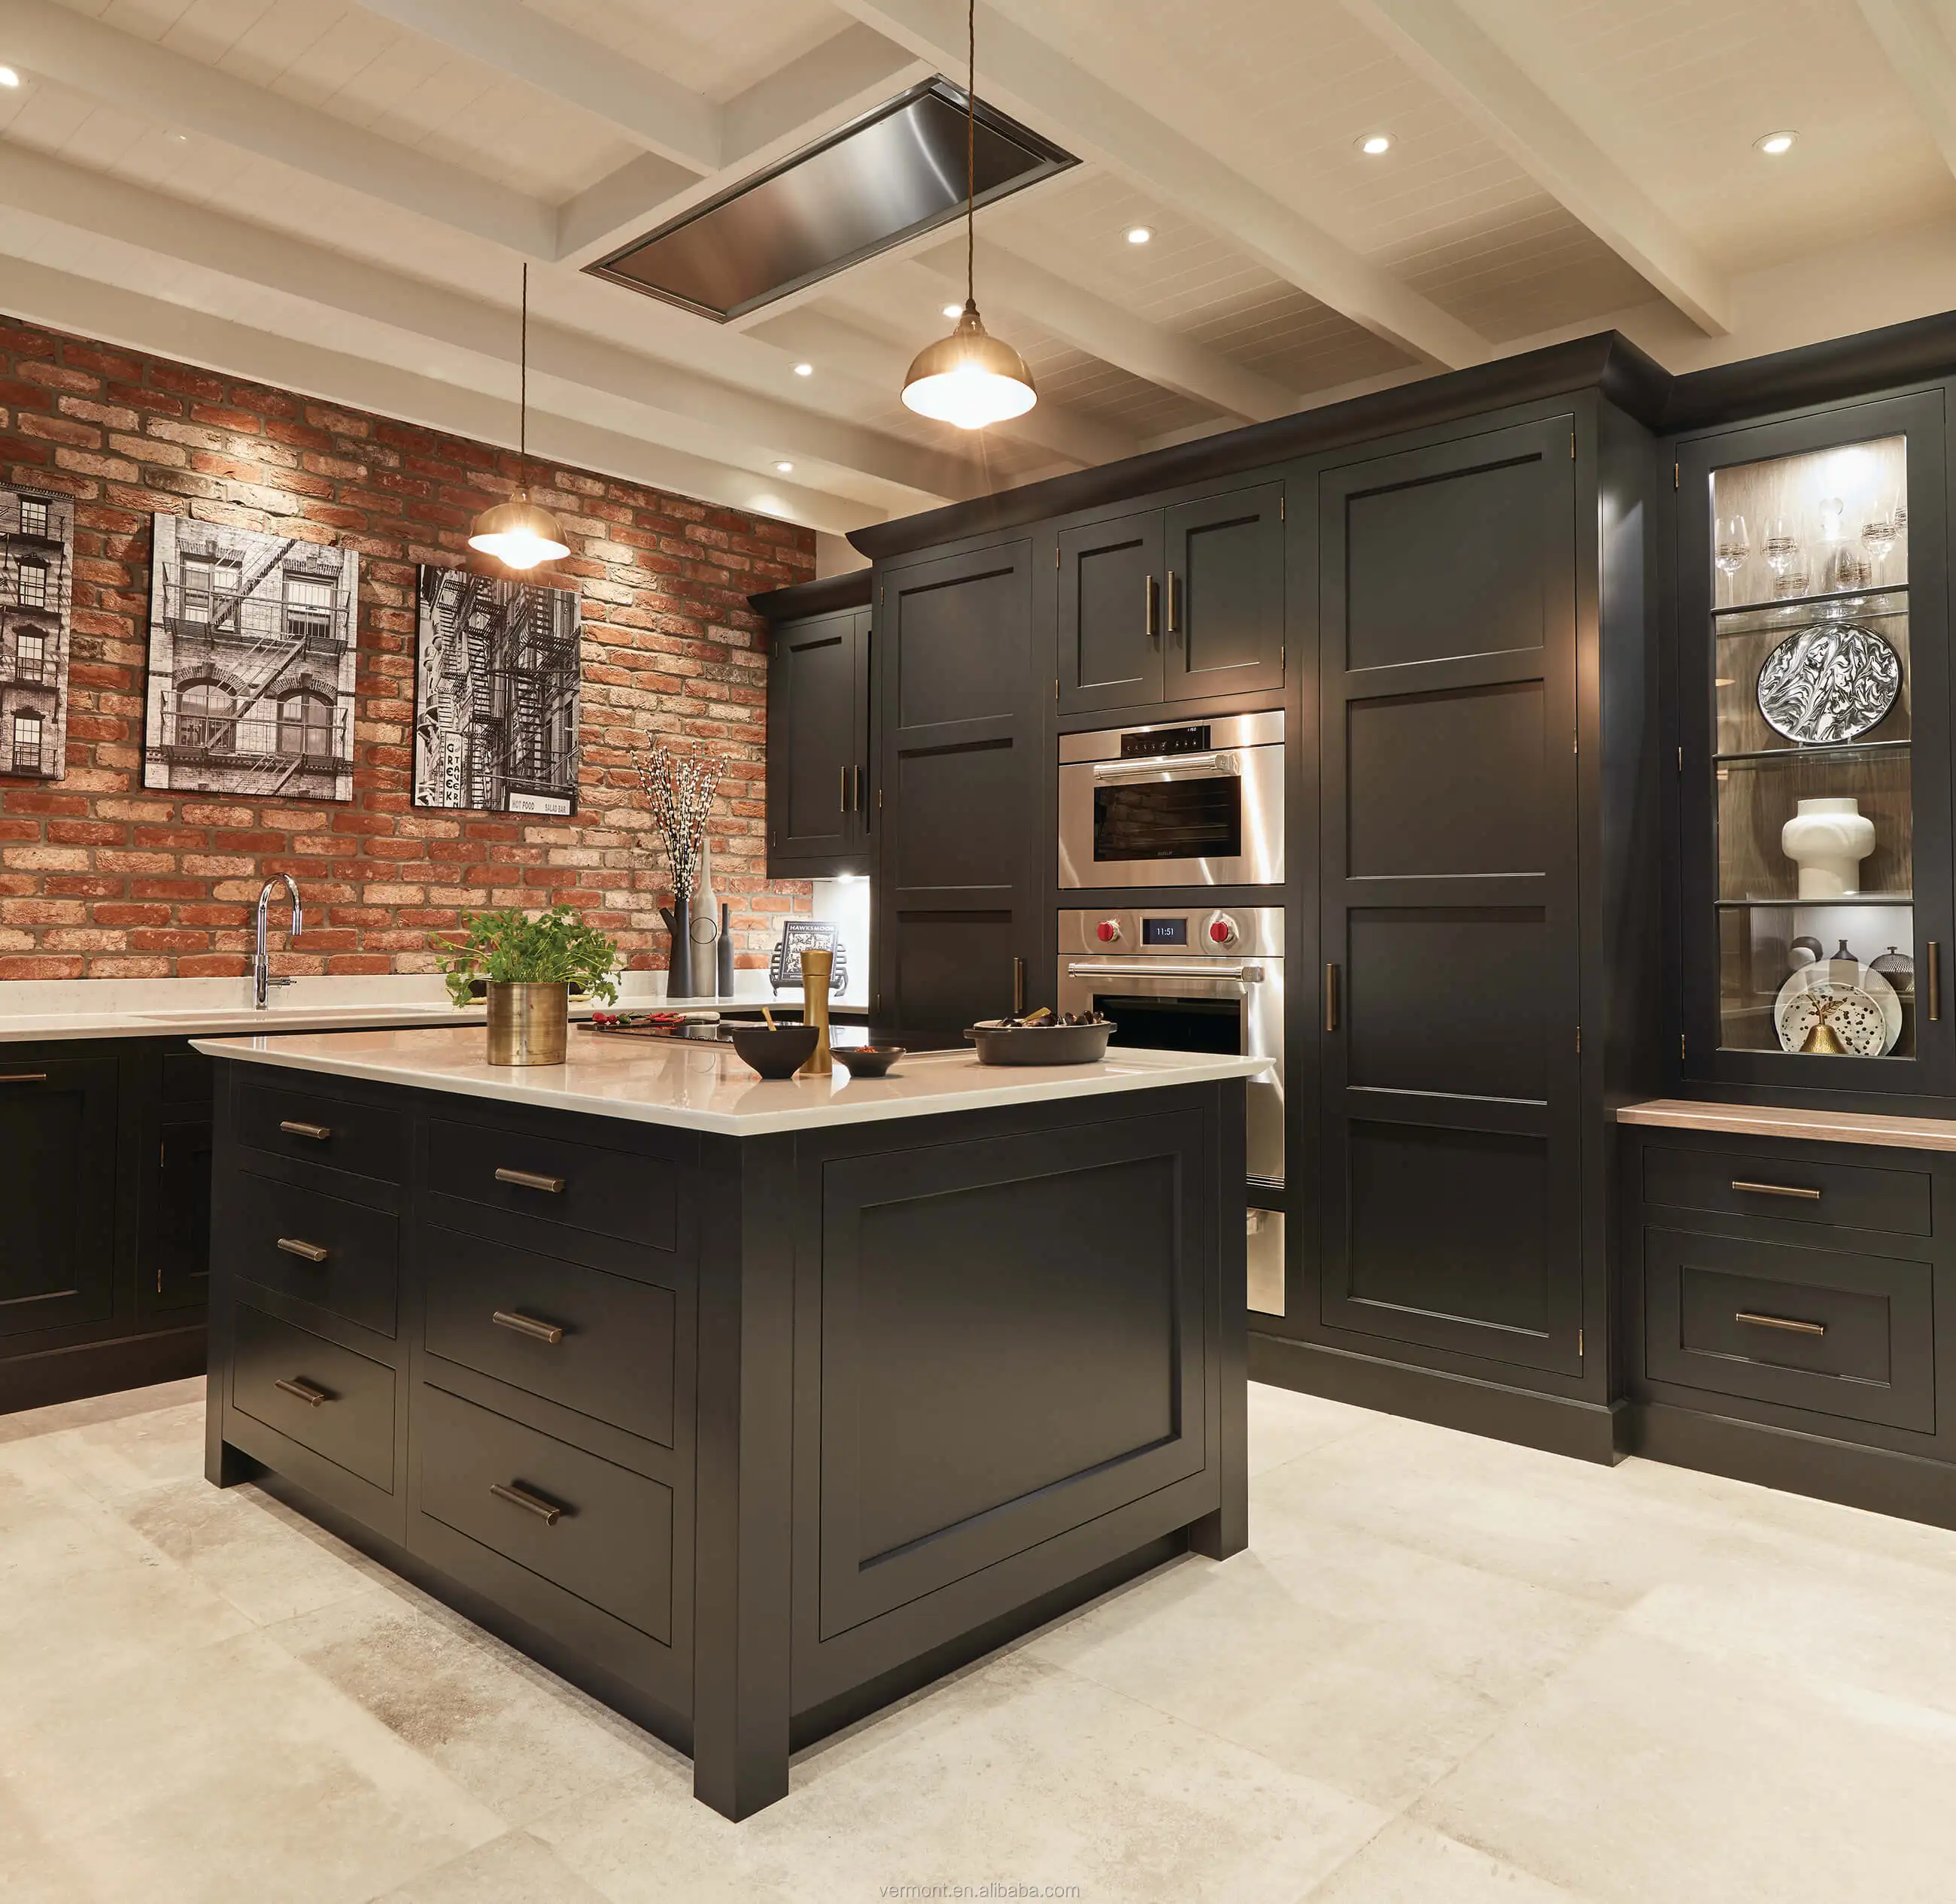 2018 Us Classic Bespoke Black Color Matt Lacquer Shaker Wooden Kitchen Cabinet Designs Modern